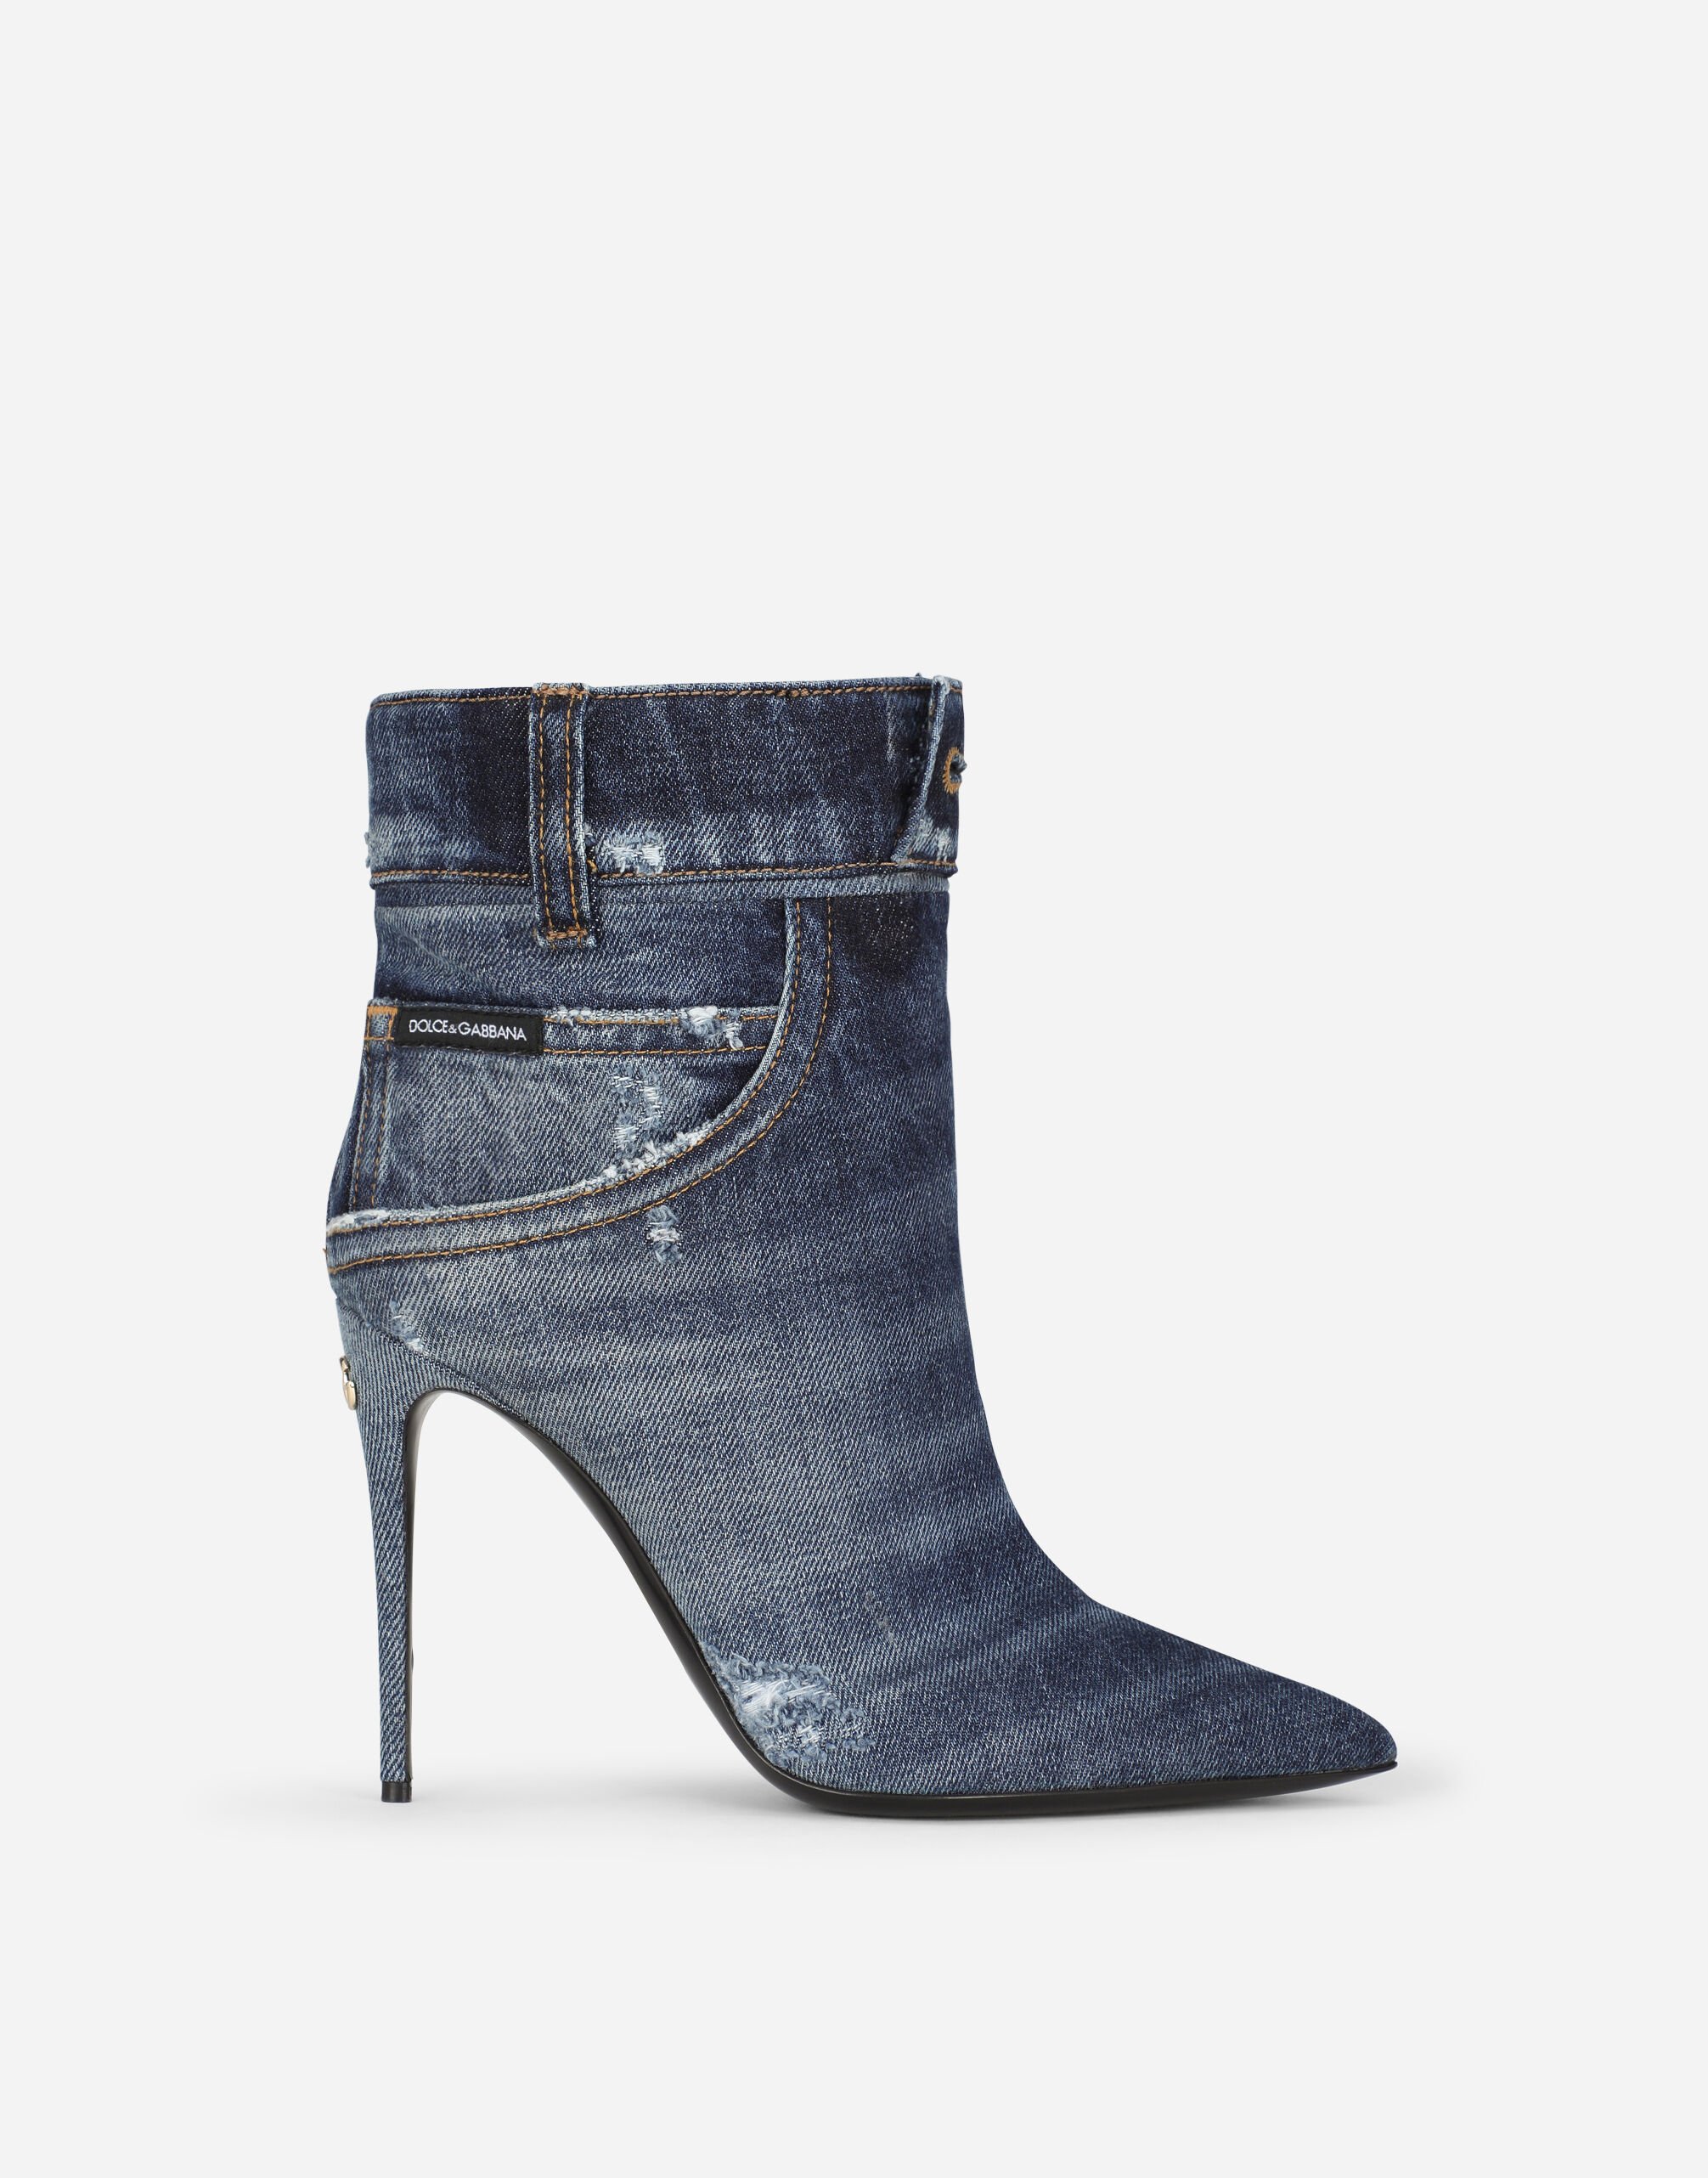 Dolce&Gabbana Patchwork denim ankle boots Black GY6IETFUFJR